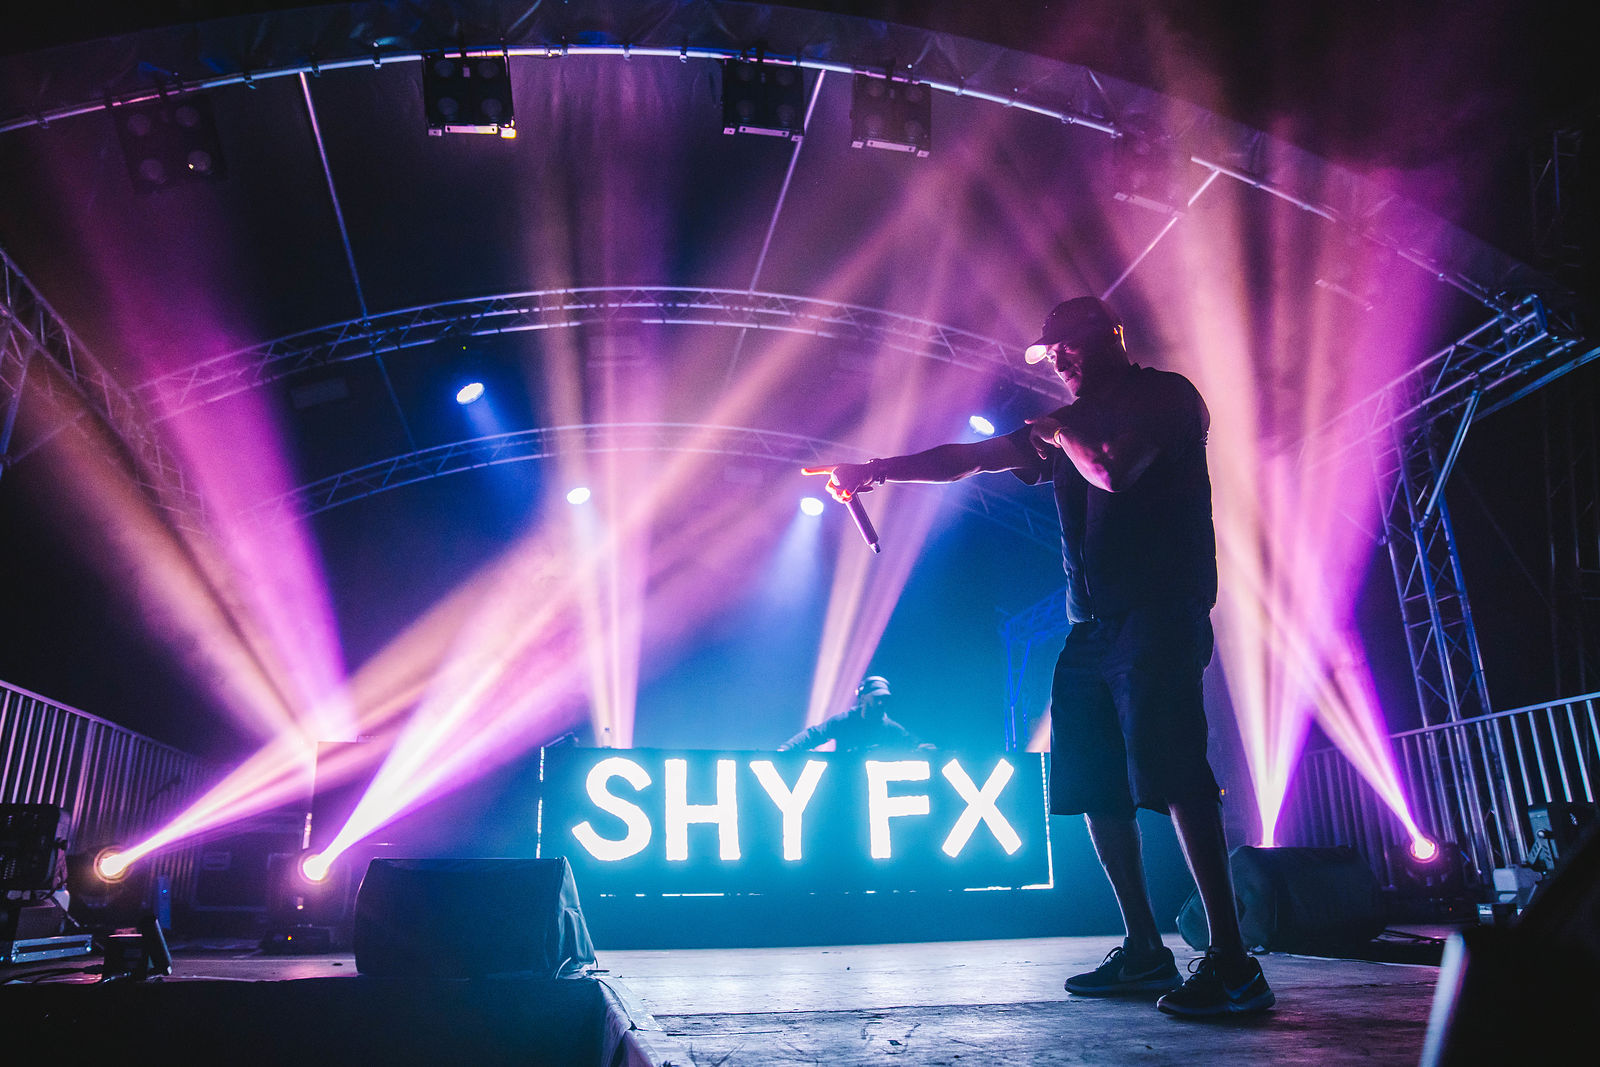 Shy FX Soundsystem